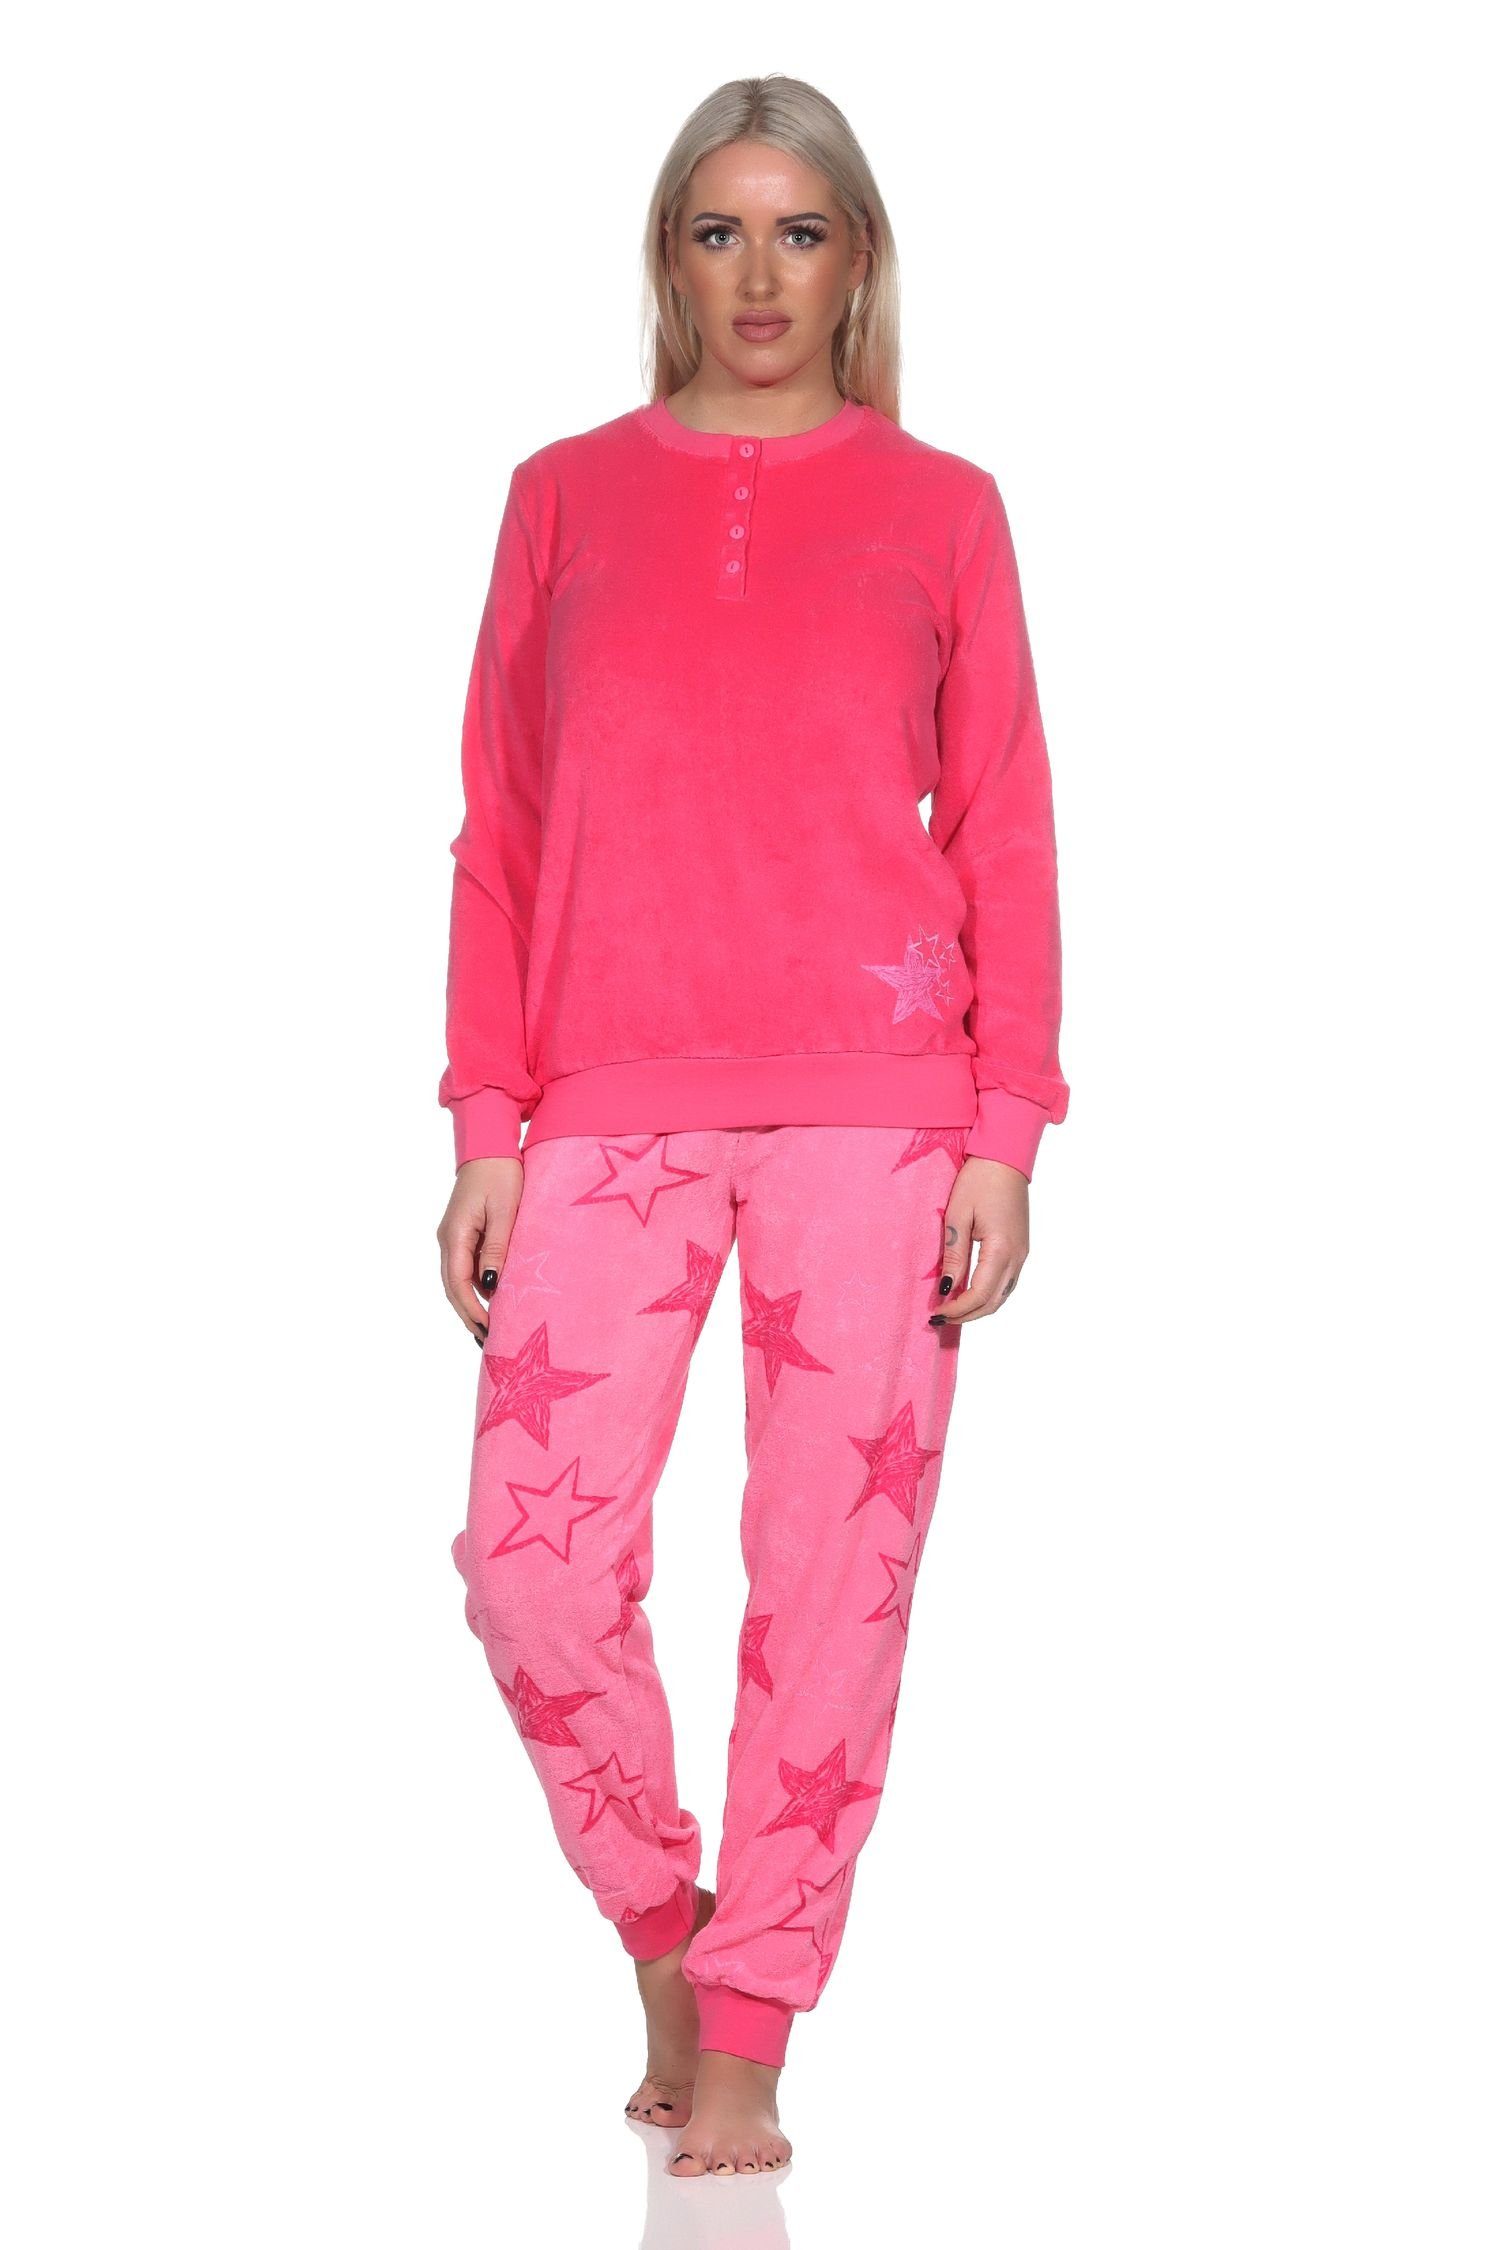 Normann Pyjama Normann Damen Frottee Schlafanzug lang mit Bündchen in Sterne Optik pink | Pyjamas